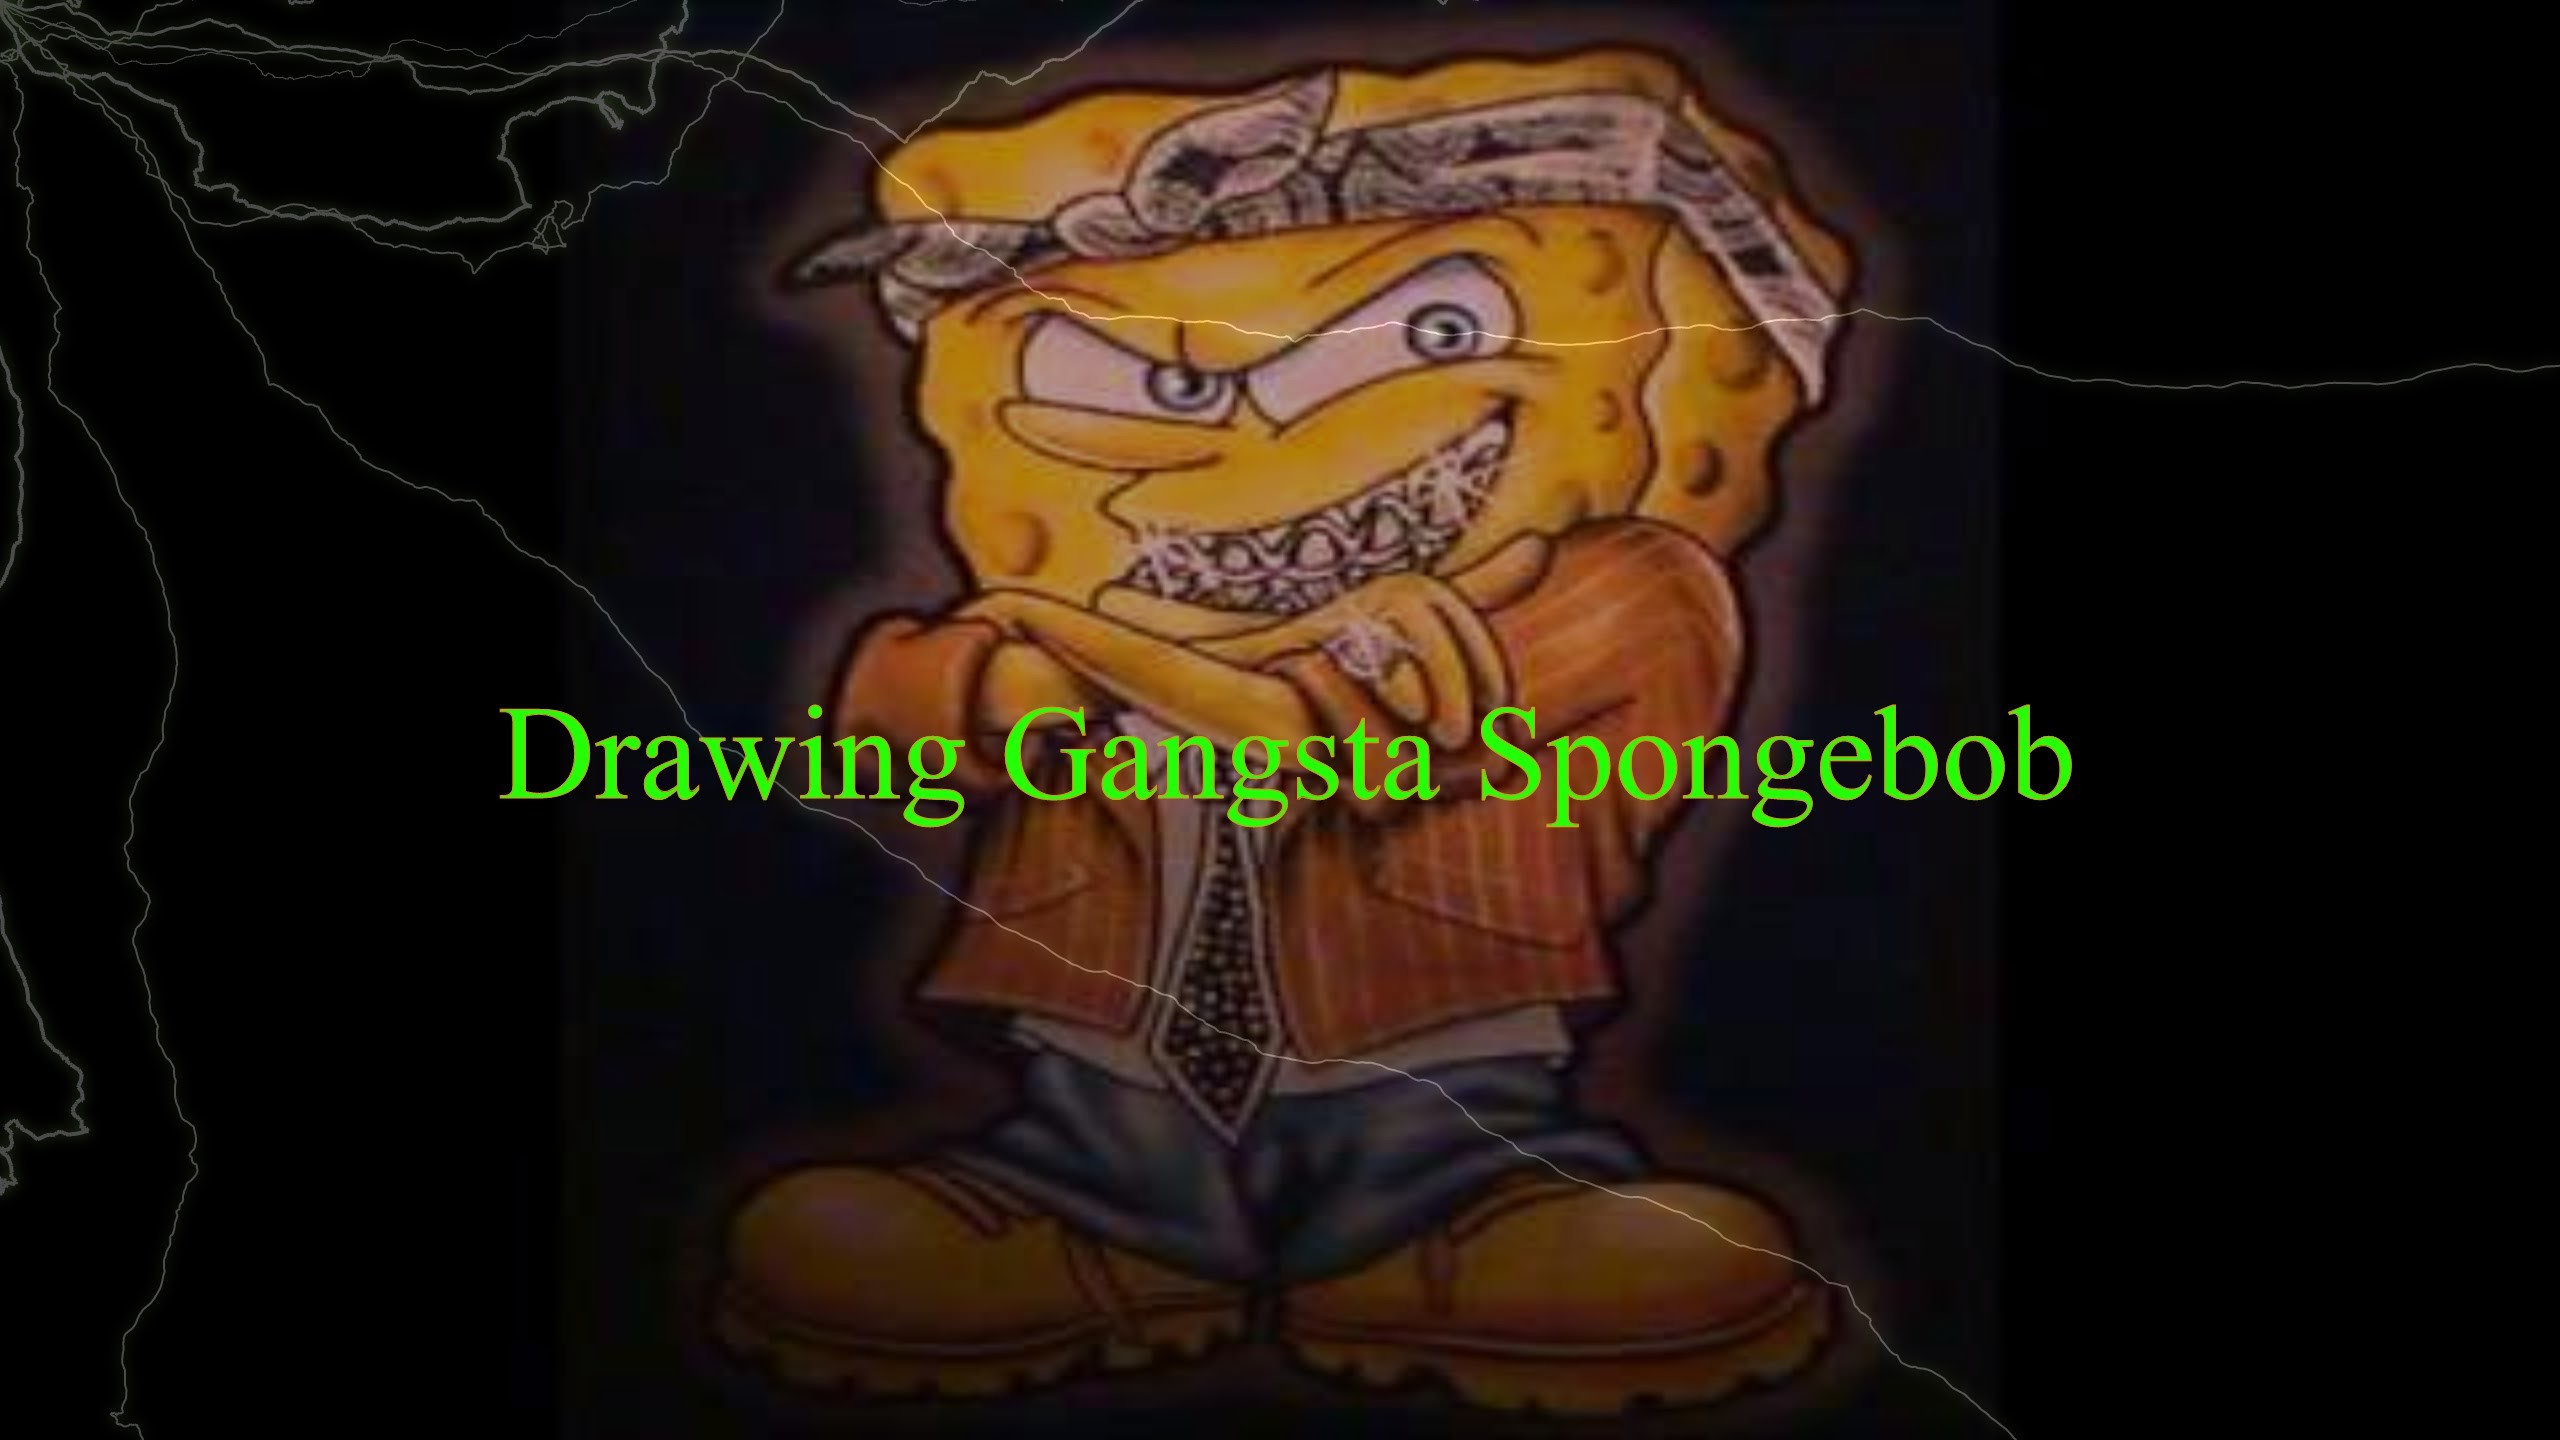 Gangster spongebob drawing